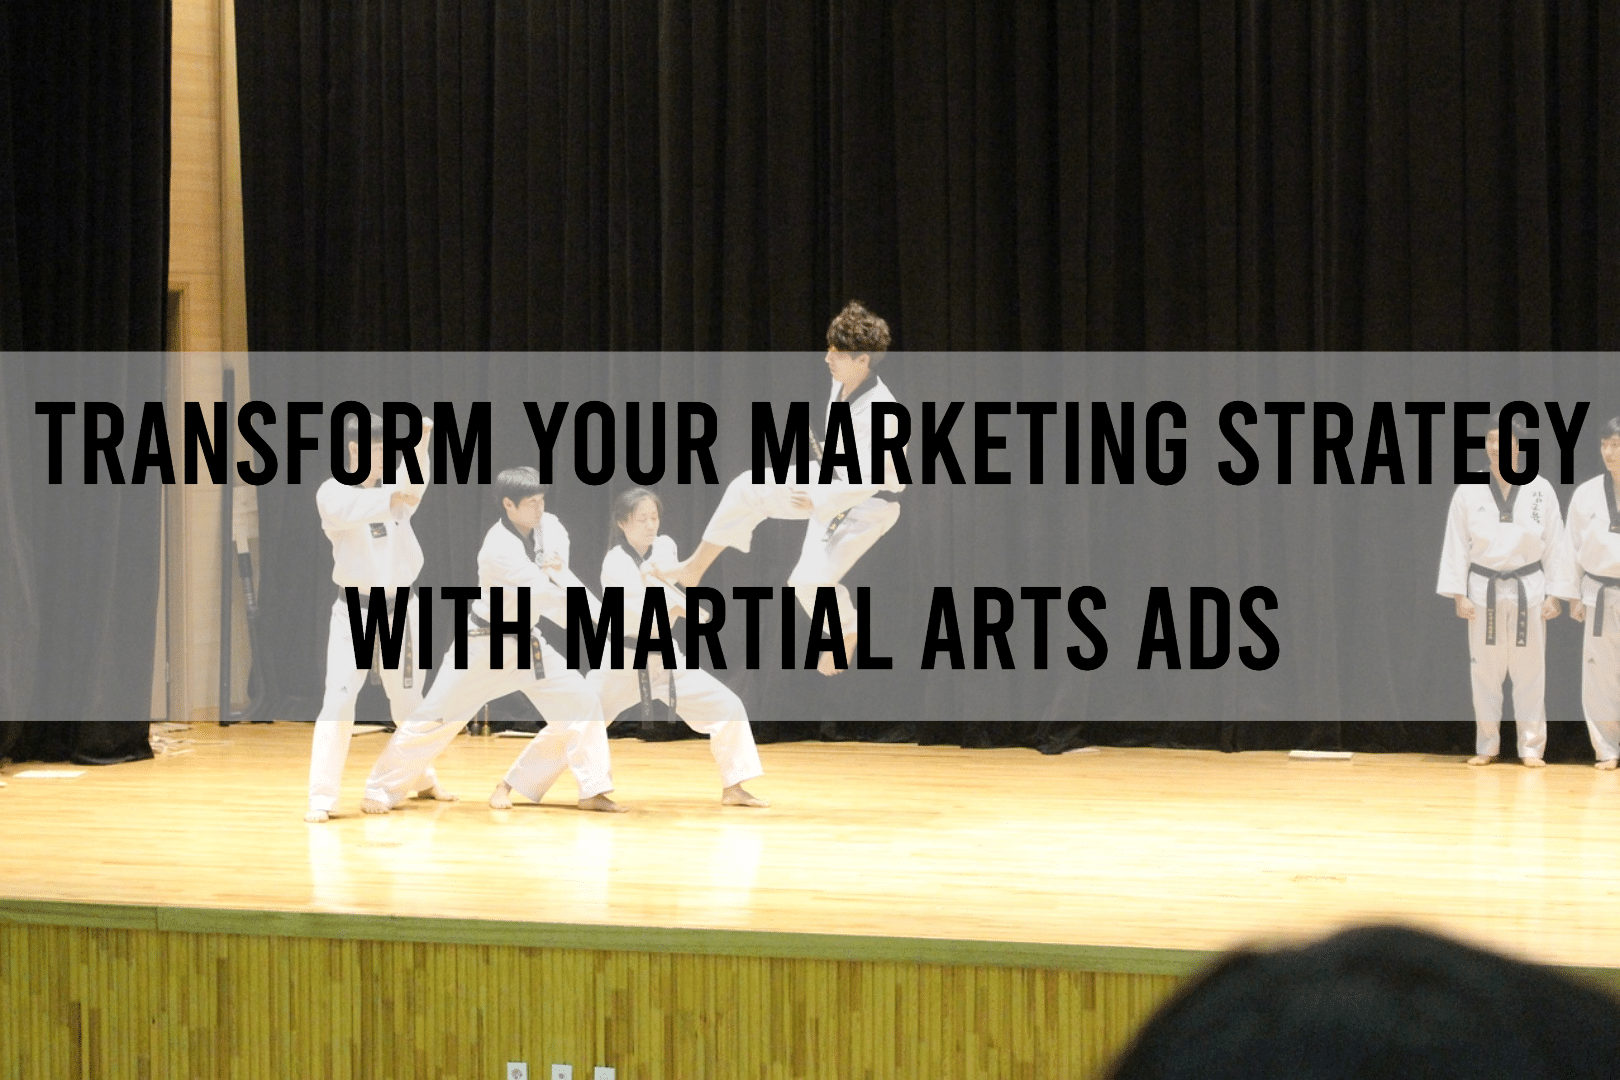 martial arts ads image